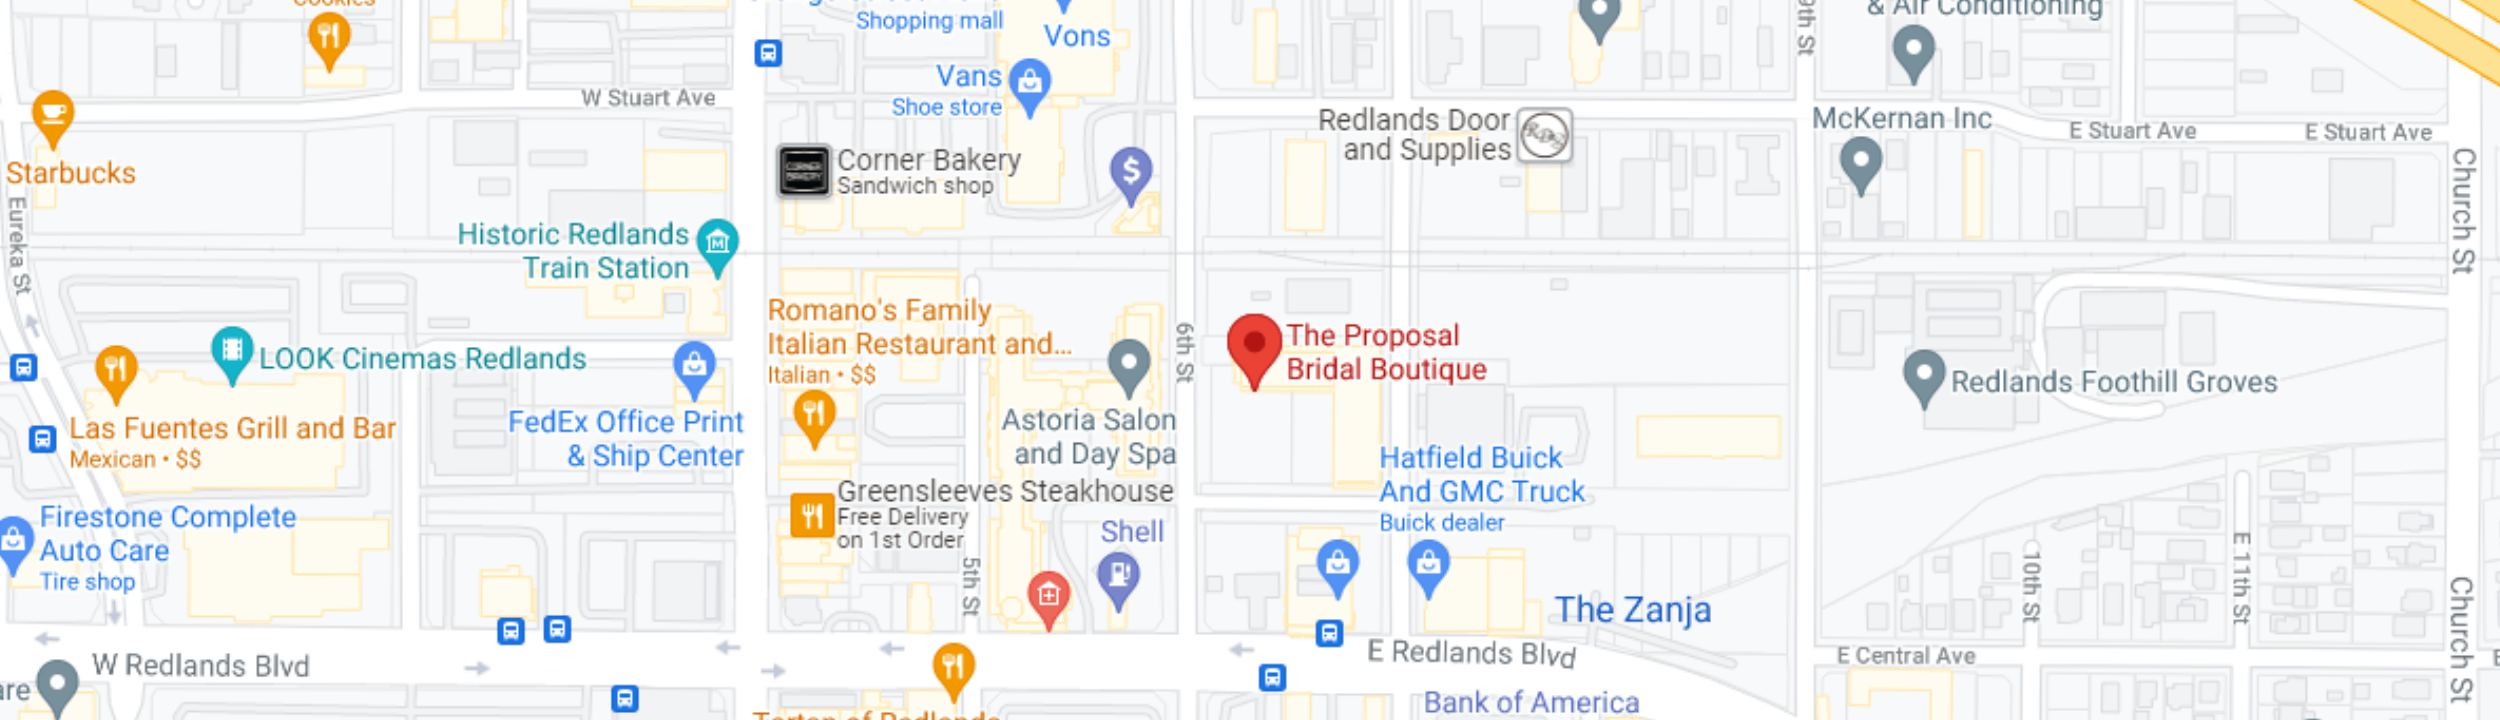 The Proposal Bridal Boutique location